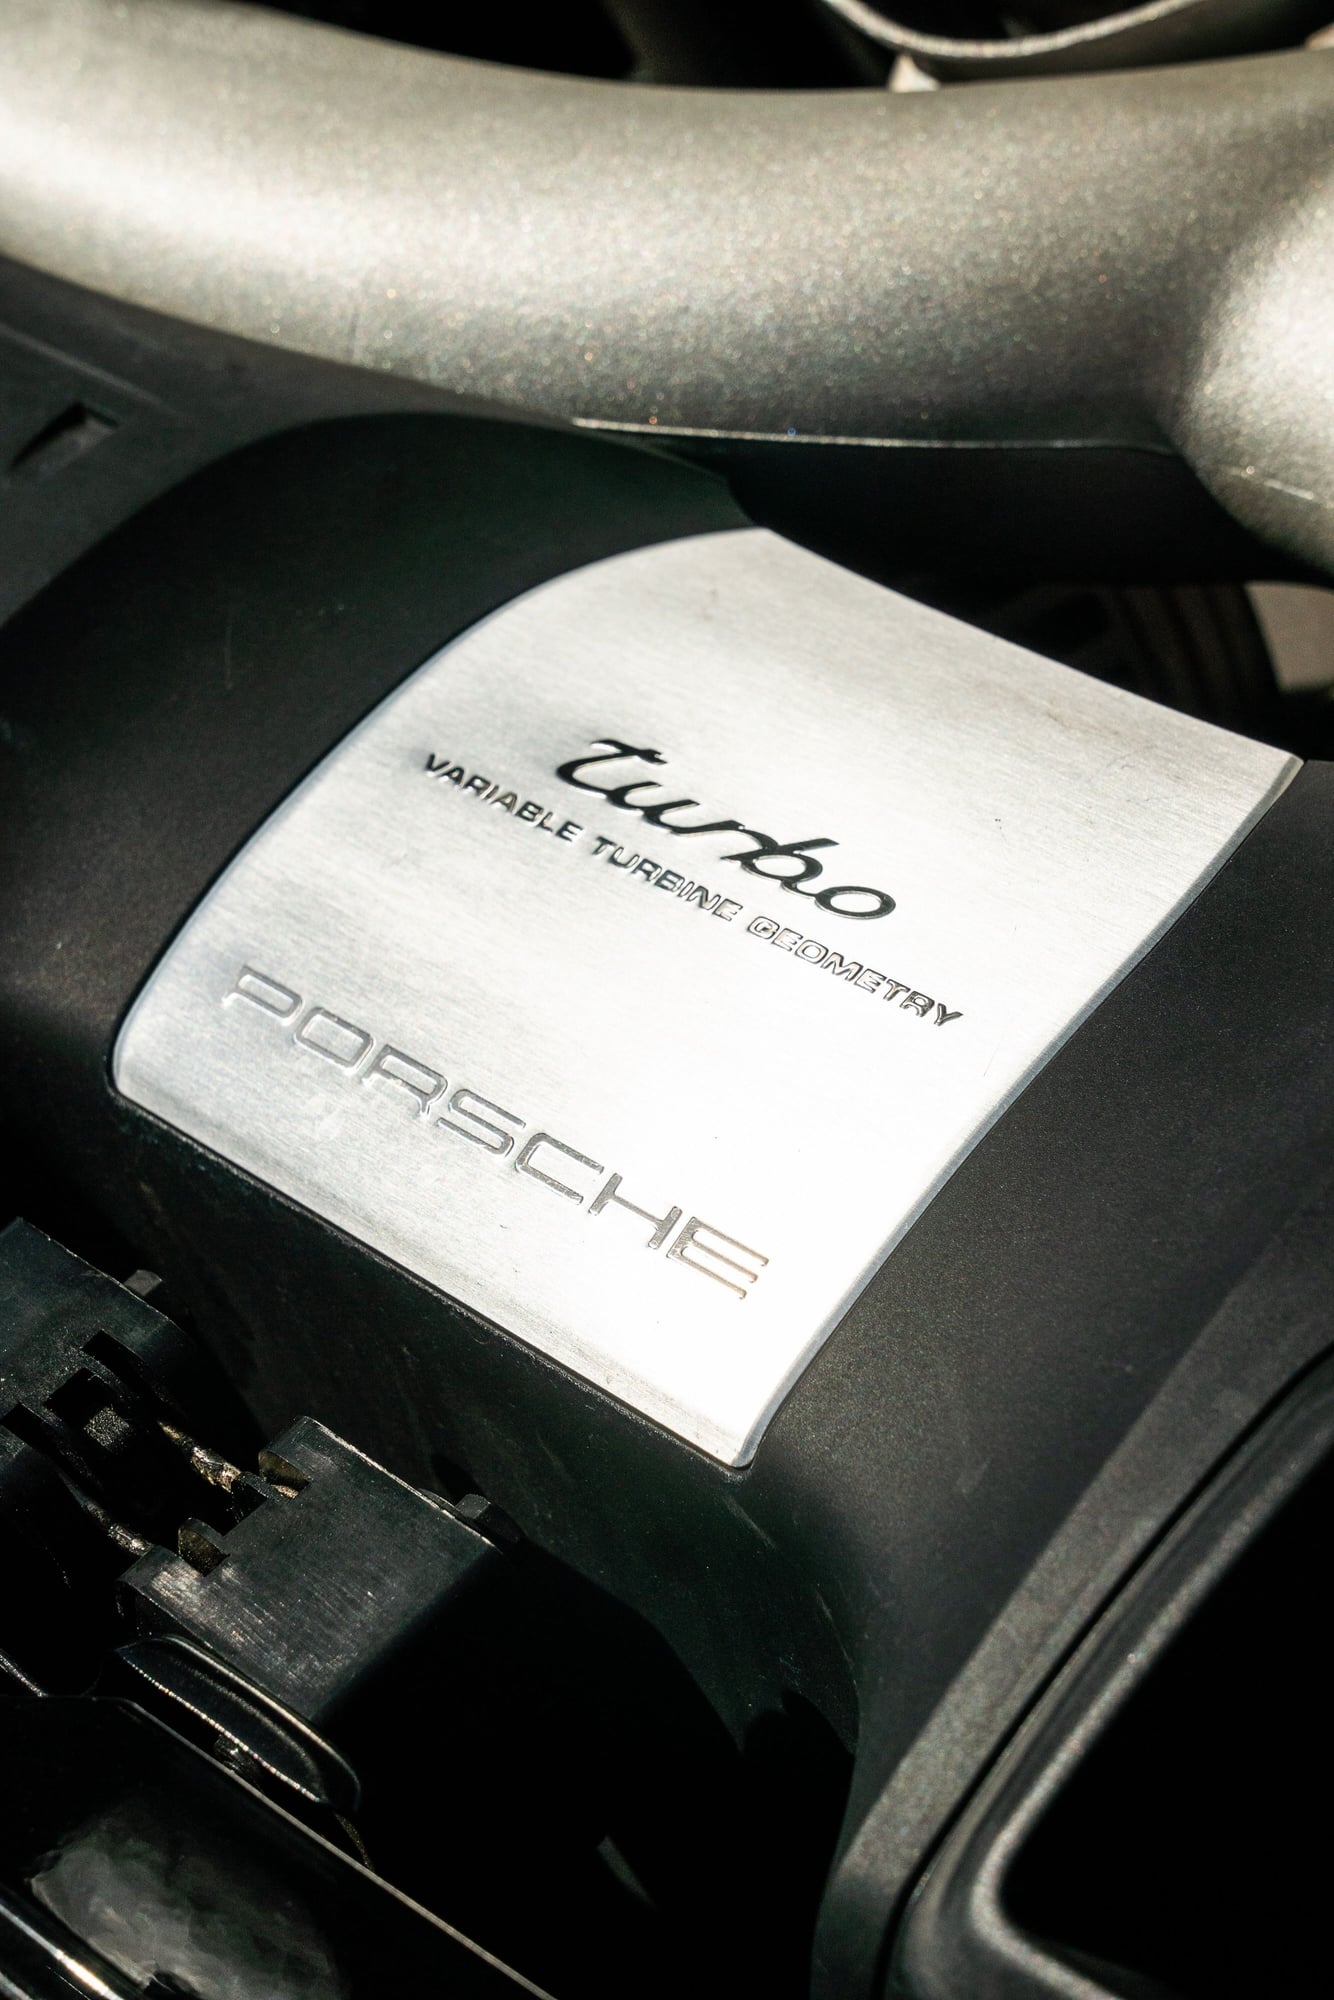 2007 Porsche 911 - 37K-MILE 2007 PORSCHE 997 TURBO COUPE 6MT - Used - VIN WP0AD29937S783903 - 6 cyl - AWD - Manual - Coupe - Black - Sacramento, CA 95819, United States